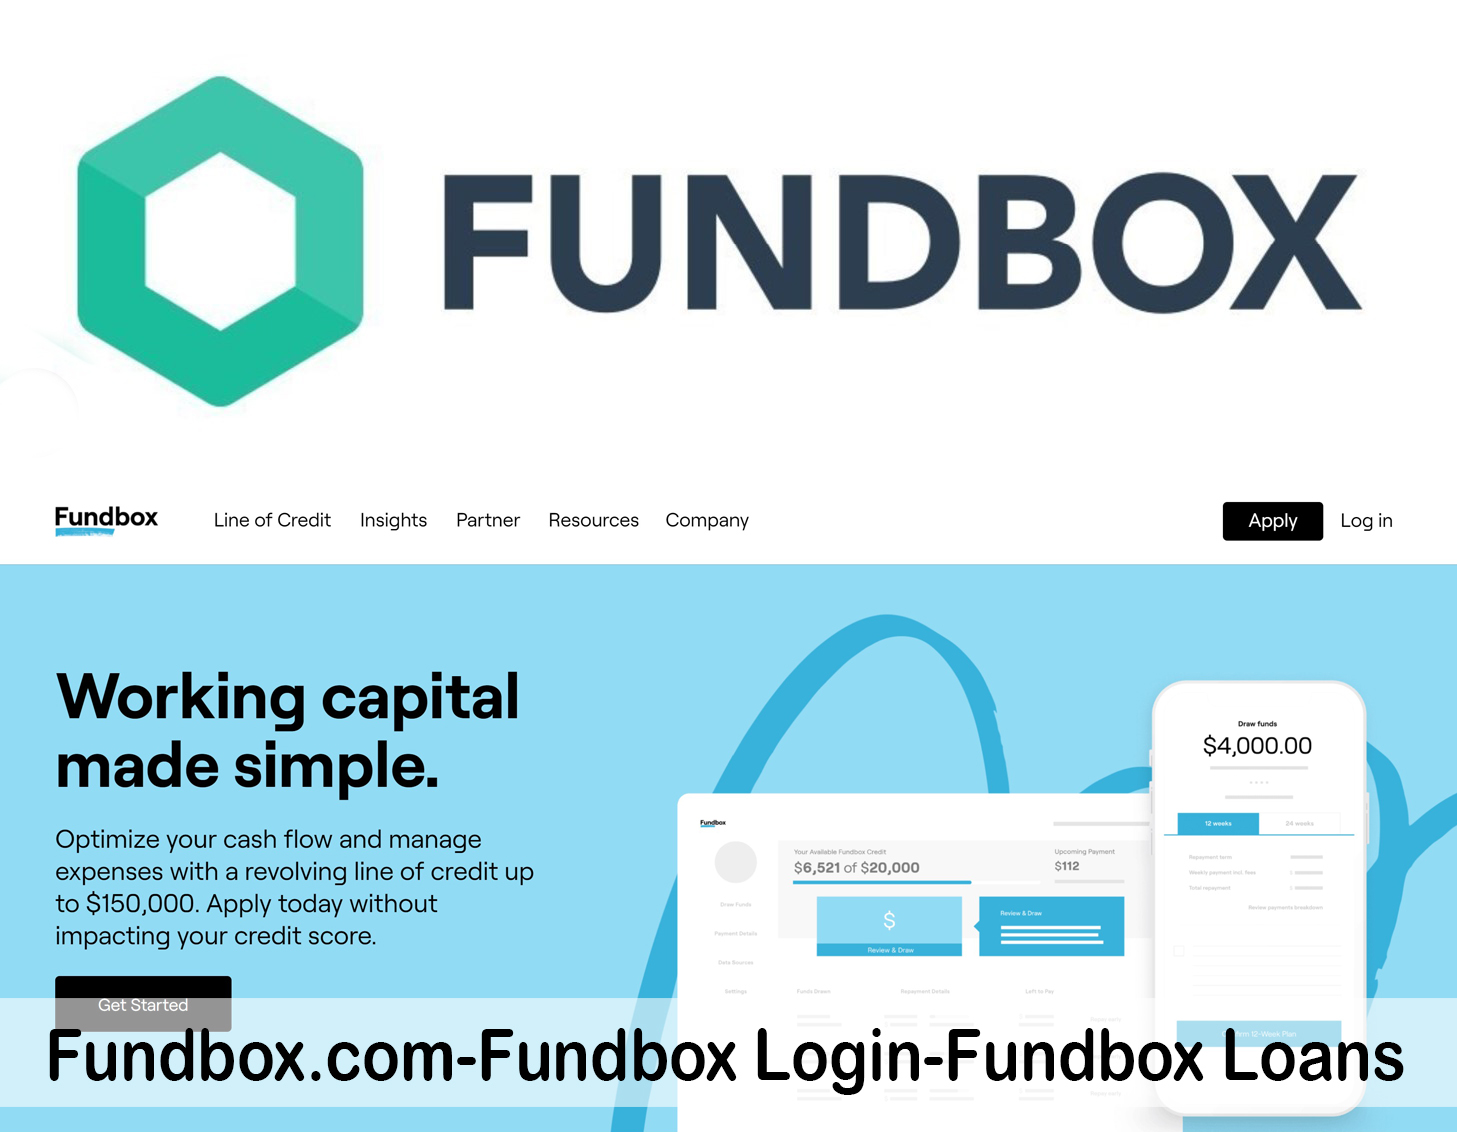 Fundbox.com-Fundbox Login-Fundbox Loans